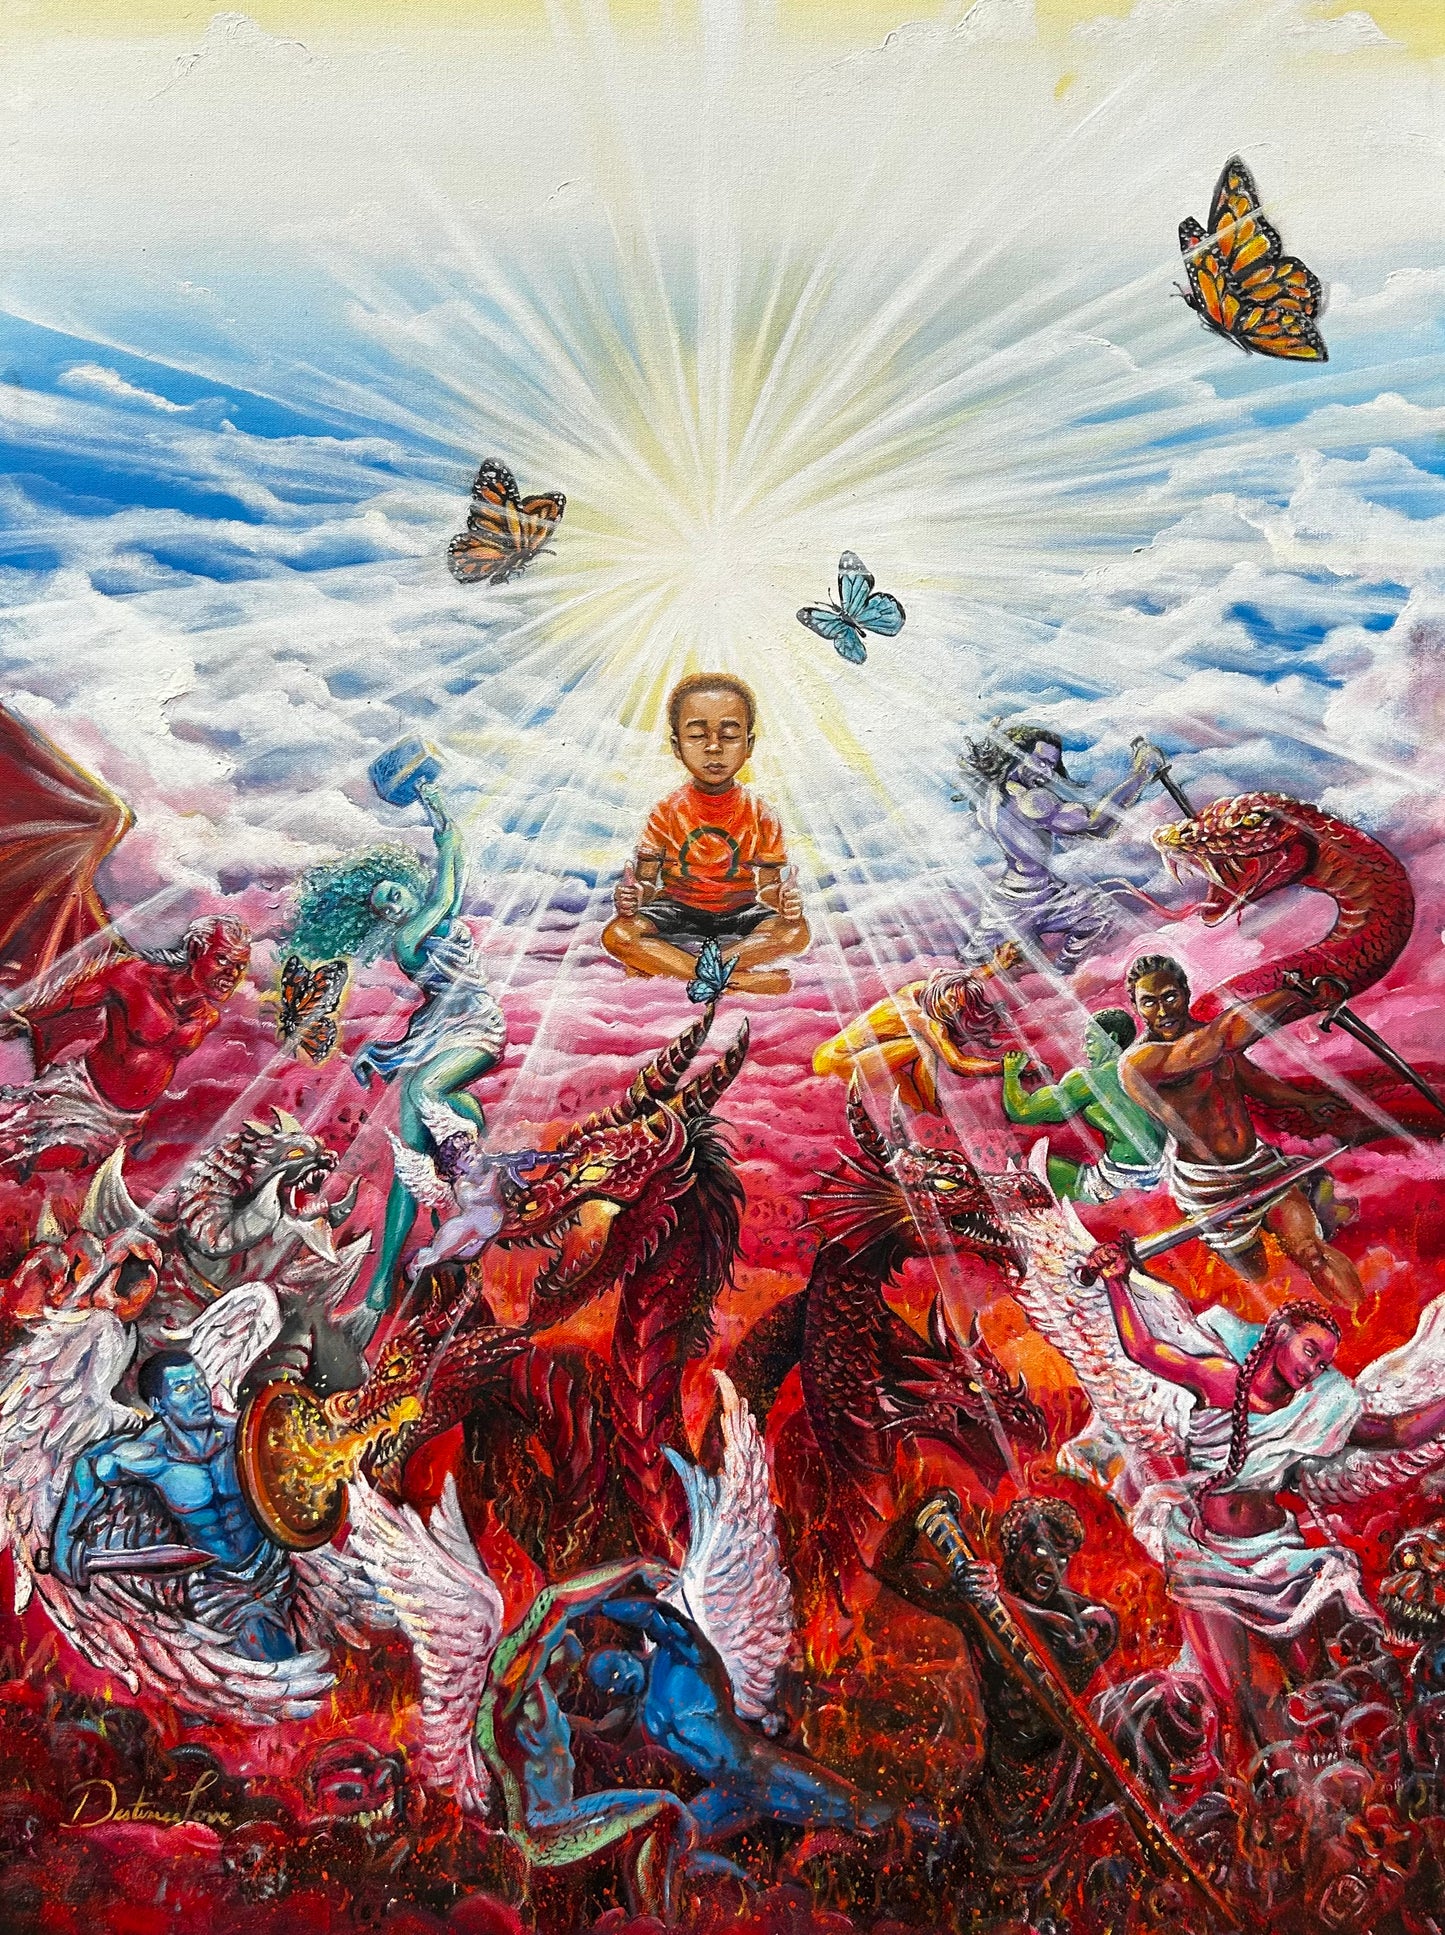 Spiritual Warfare Original Oil Painting on Canvas